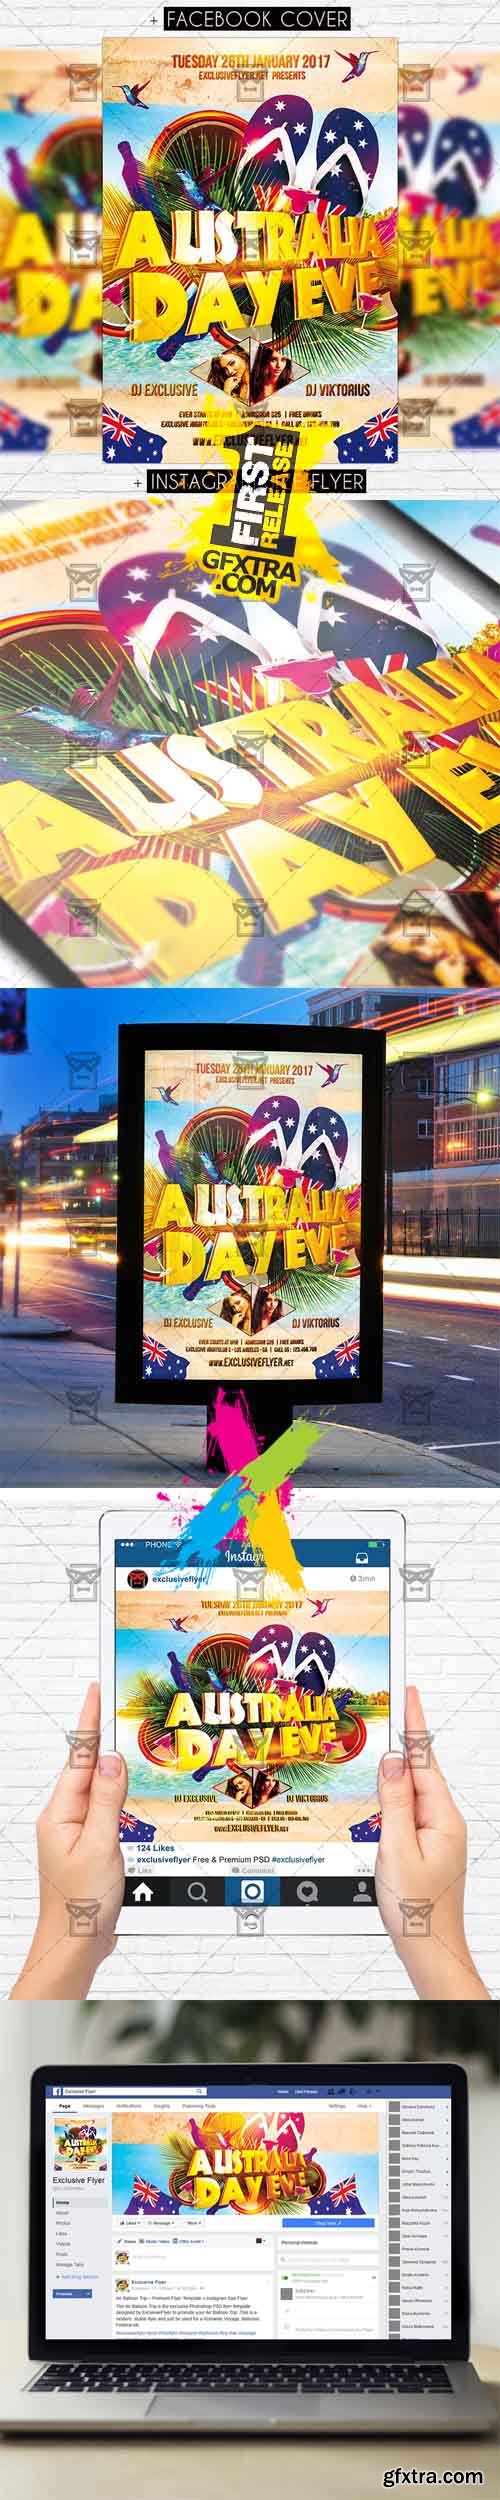 Australia Day Eve - Premium Flyer Template